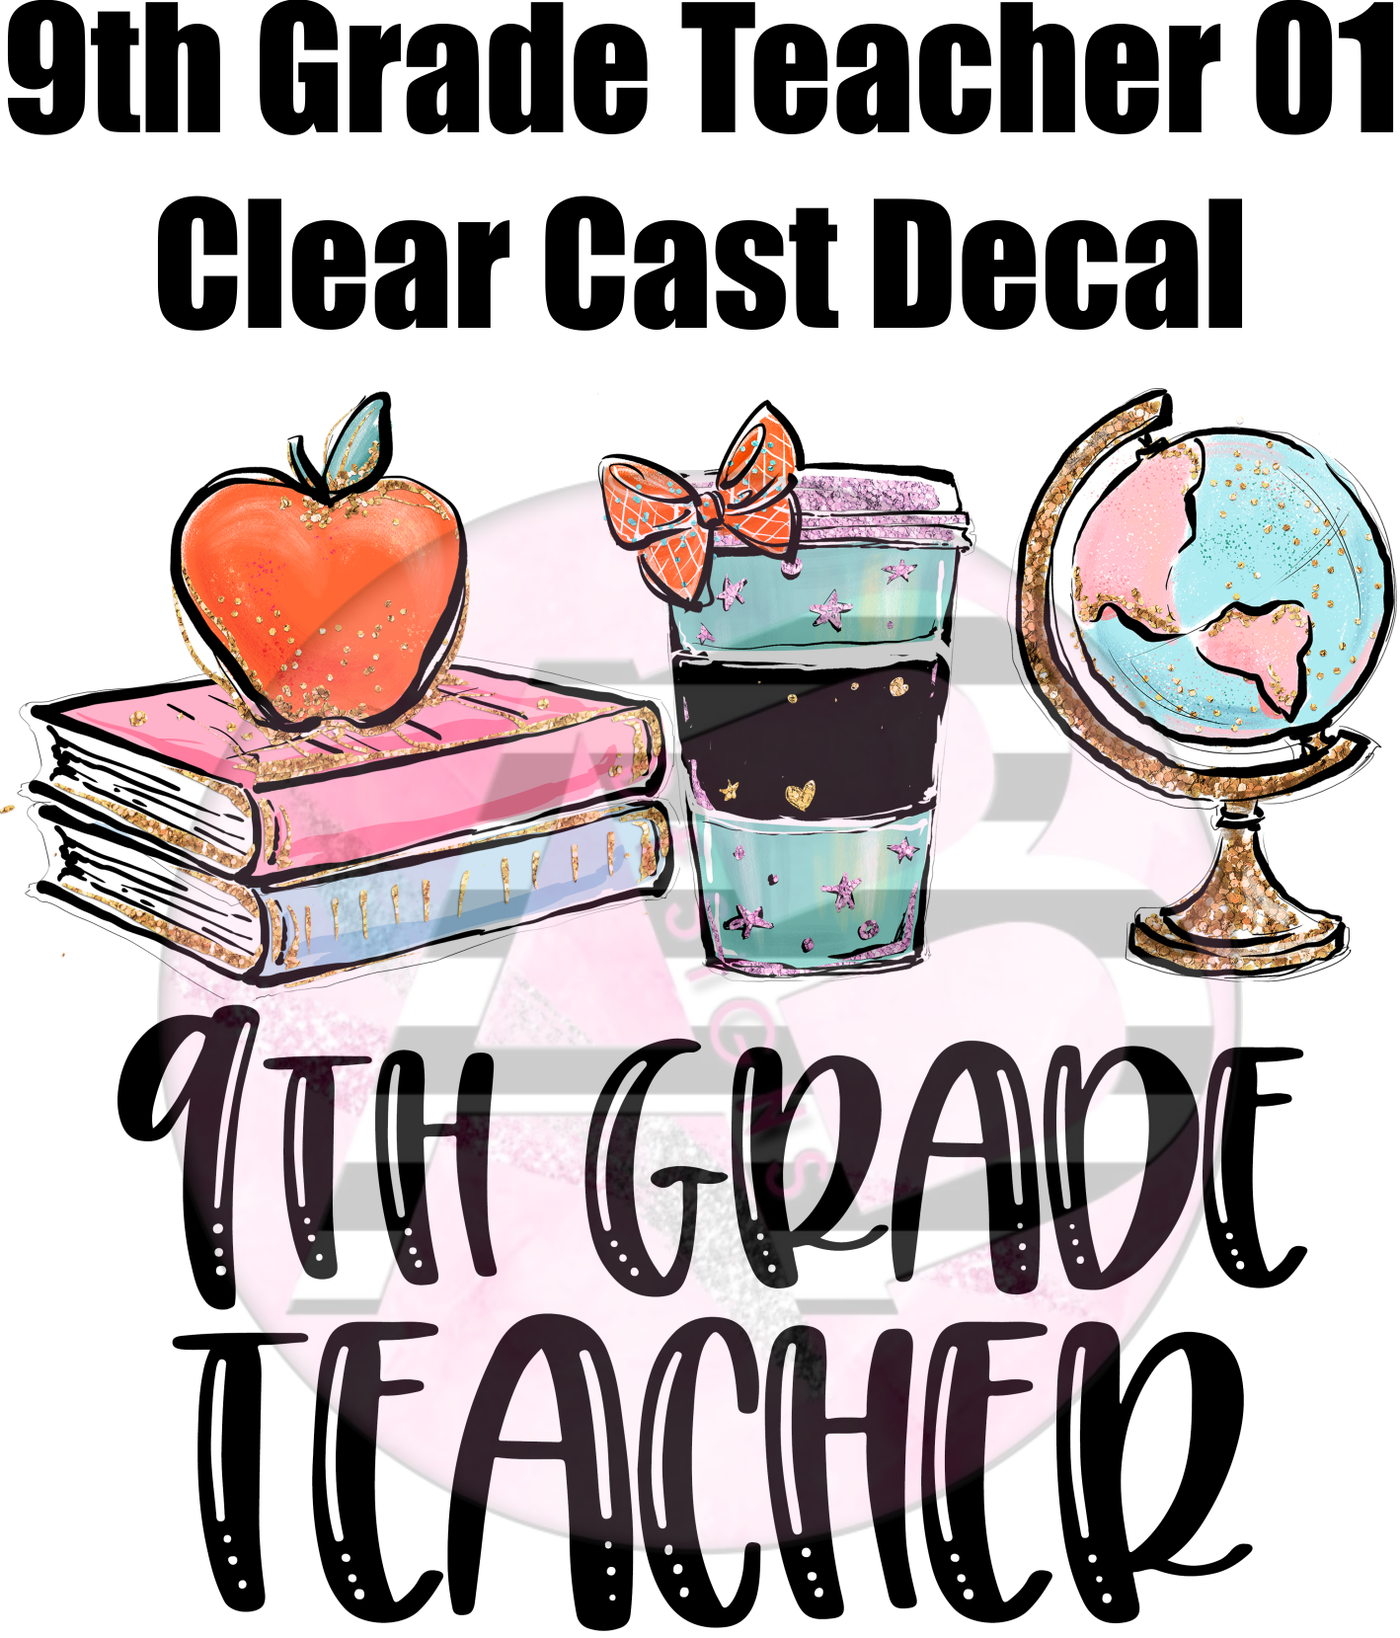 9th Grade Teacher 01 - Clear Cast Decal